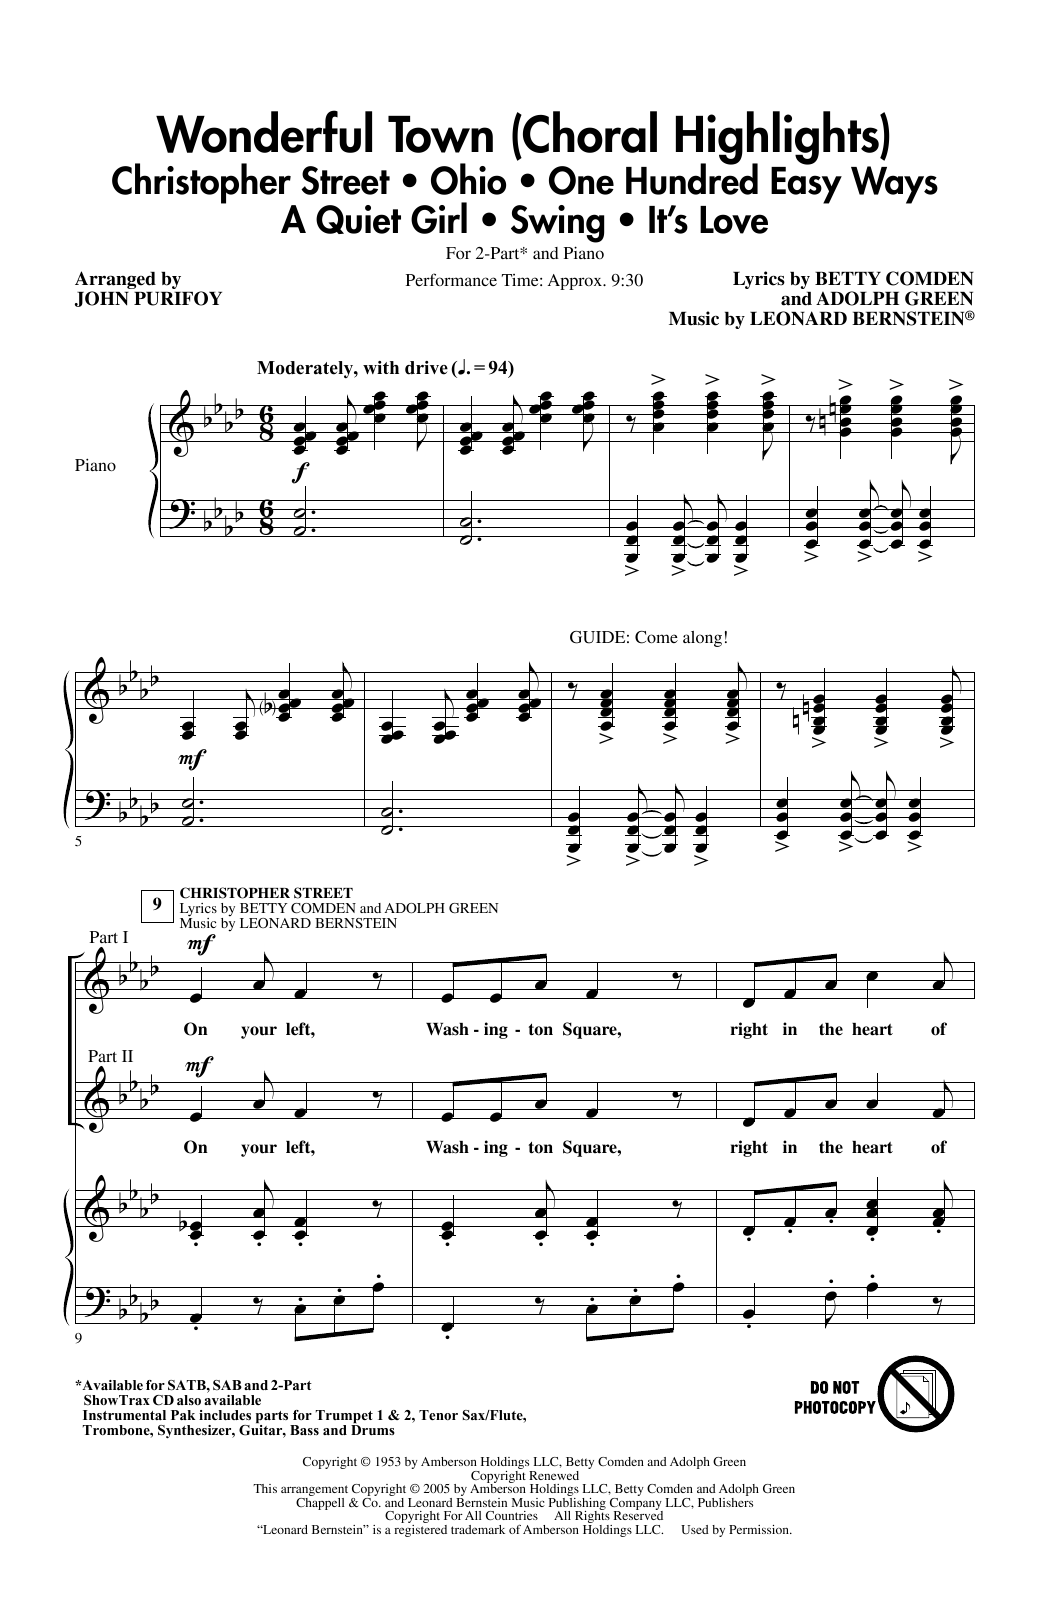 Leonard Bernstein Wonderful Town (Choral Highlights) (arr. John Purifoy) Sheet Music Notes & Chords for SATB Choir - Download or Print PDF